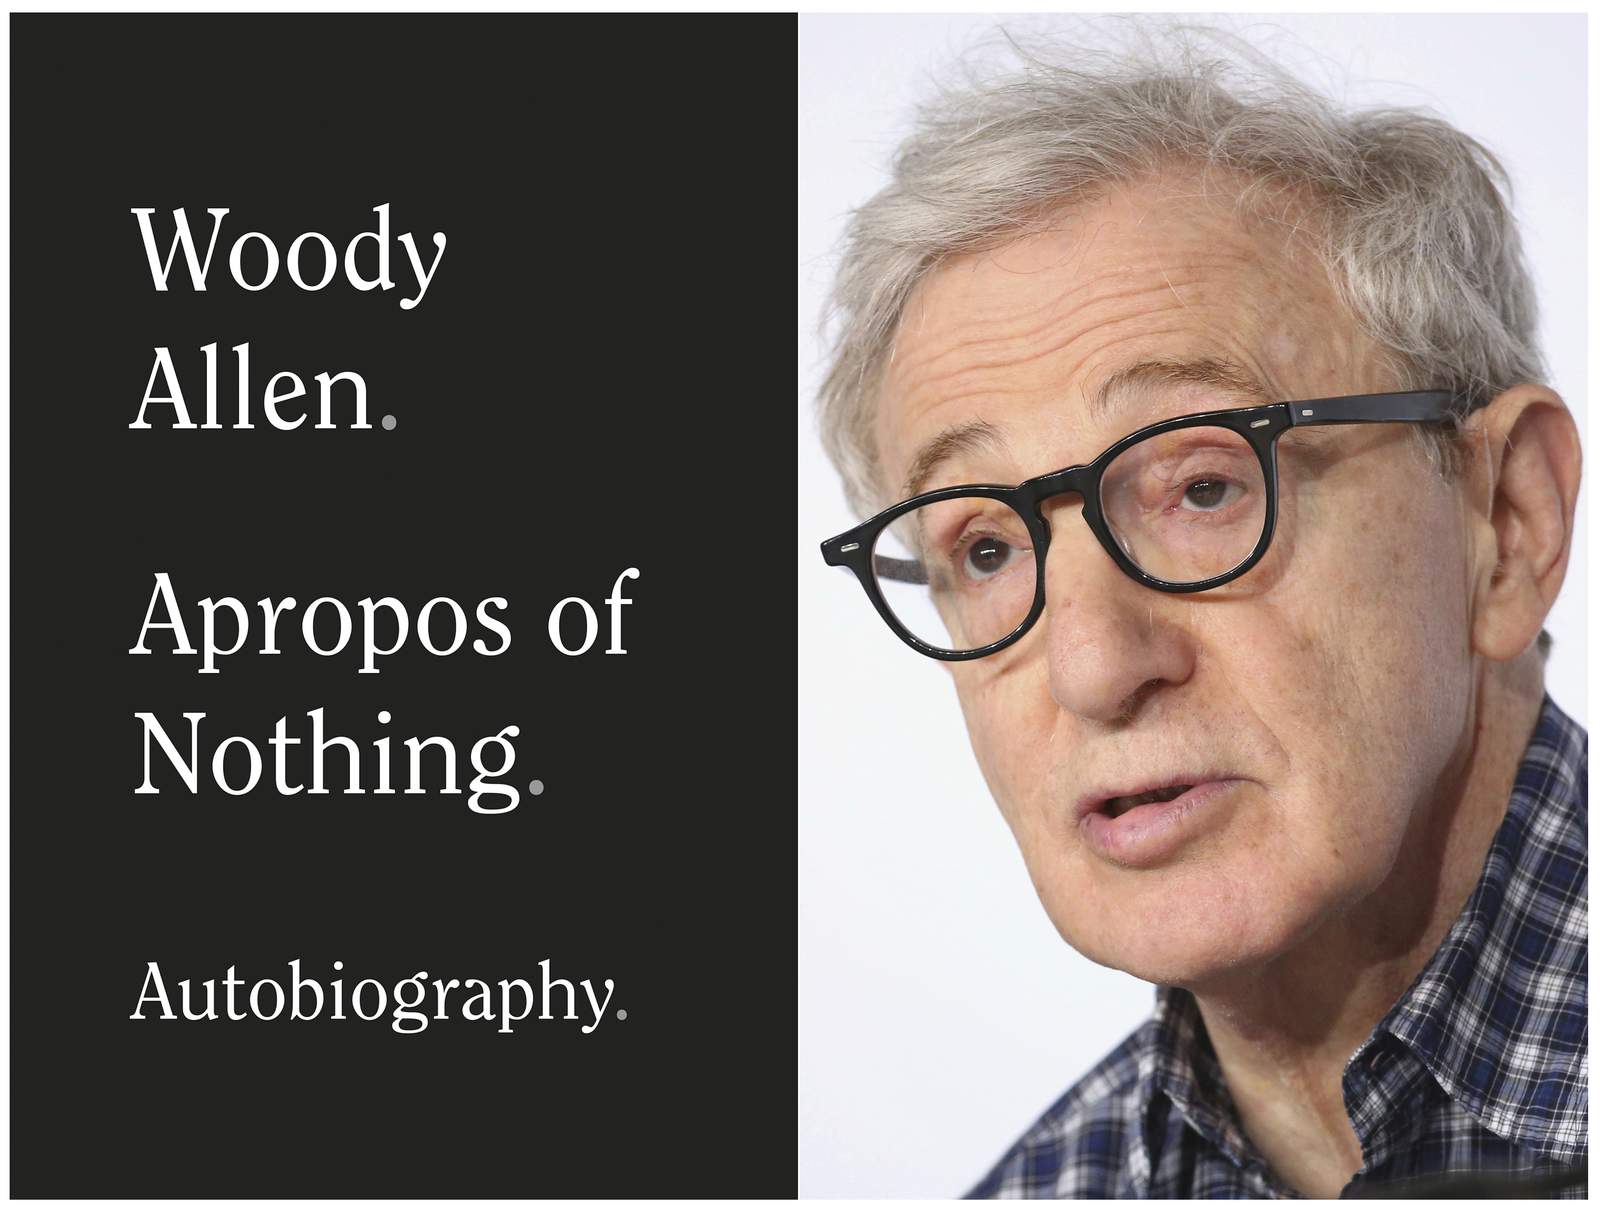 Dylan and Ronan Farrow blast upcoming Woody Allen memoir